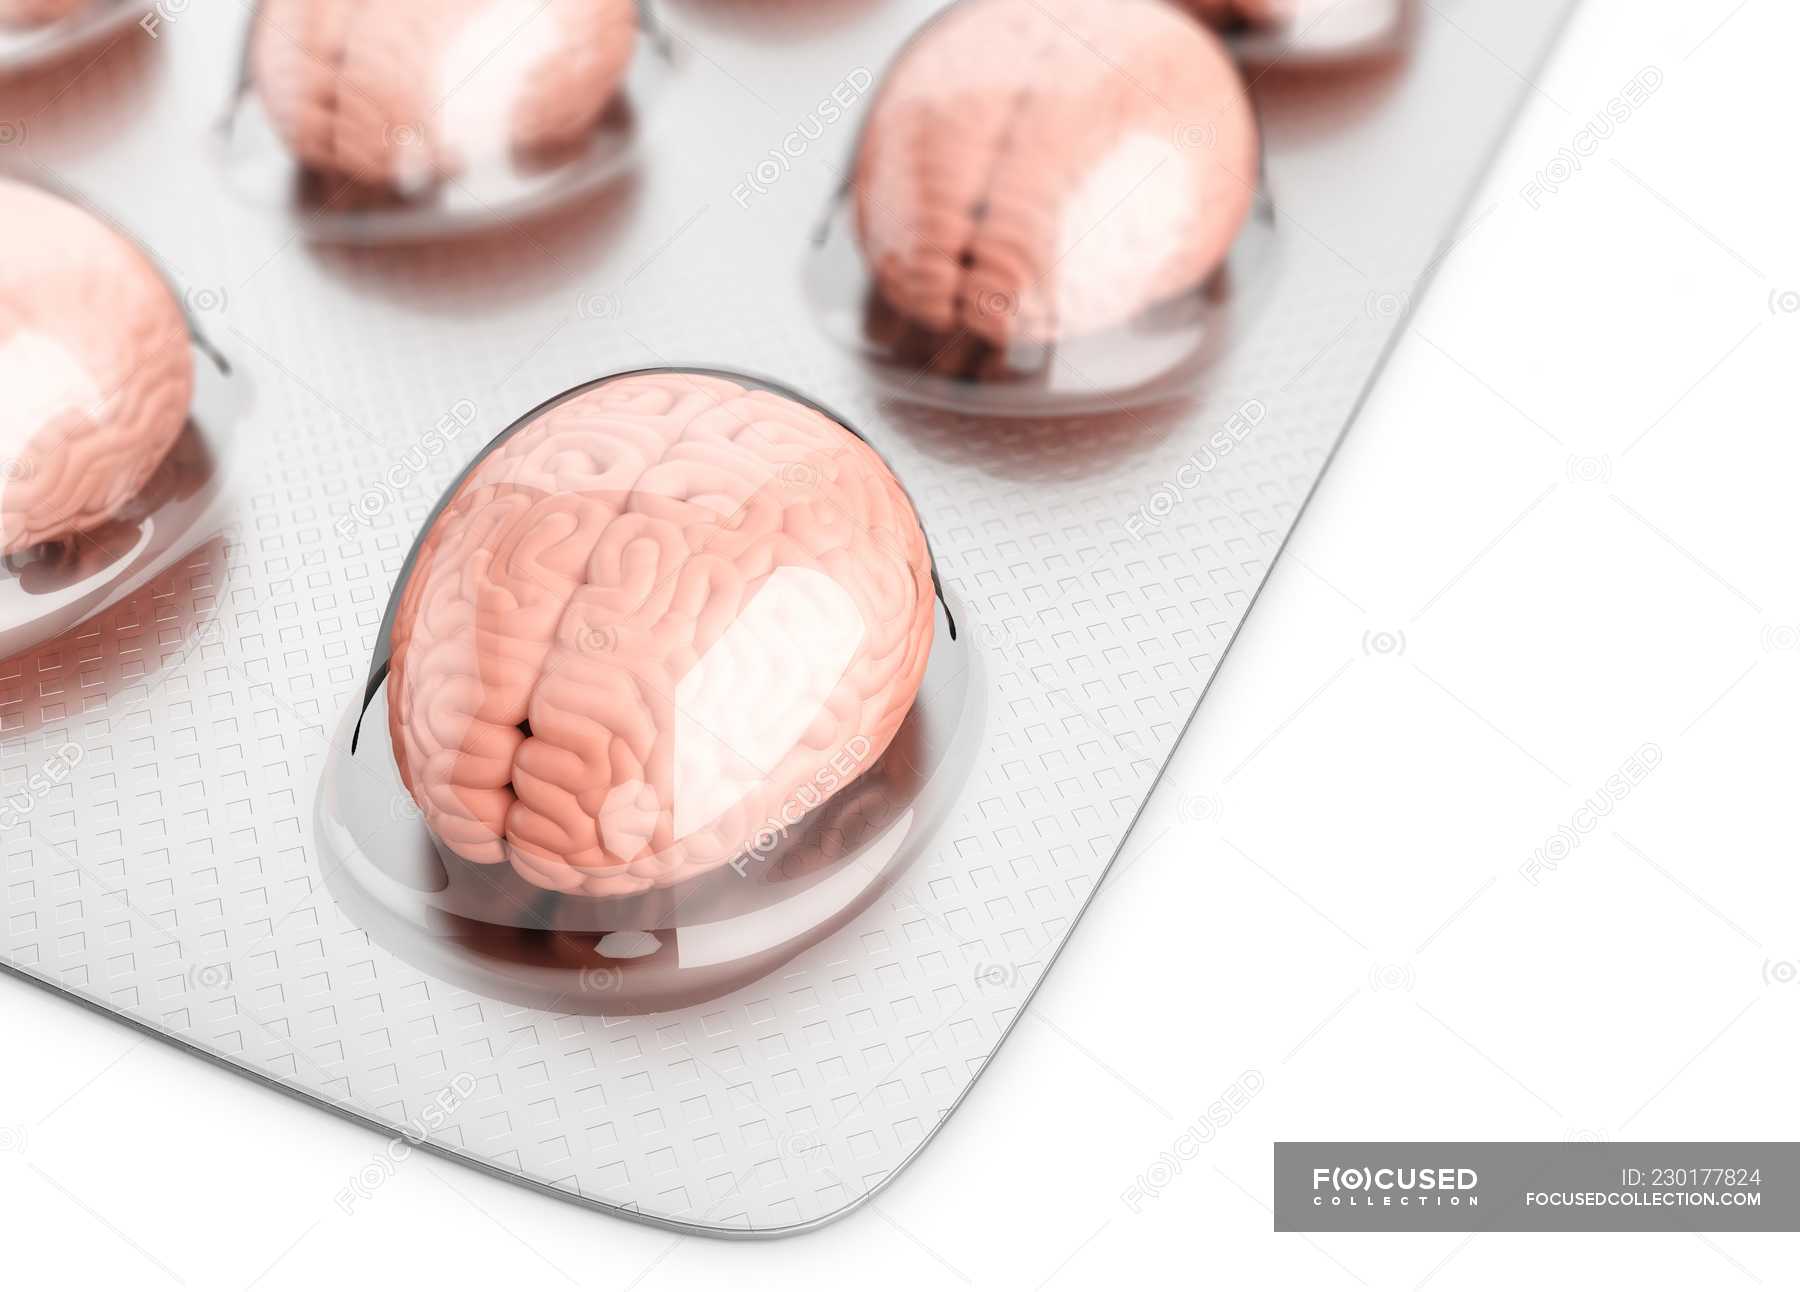 zeewier Opgewonden zijn Korea Close-up of 3D illustration of brain-like pills in blister pack. — brains,  medical - Stock Photo | #230177824